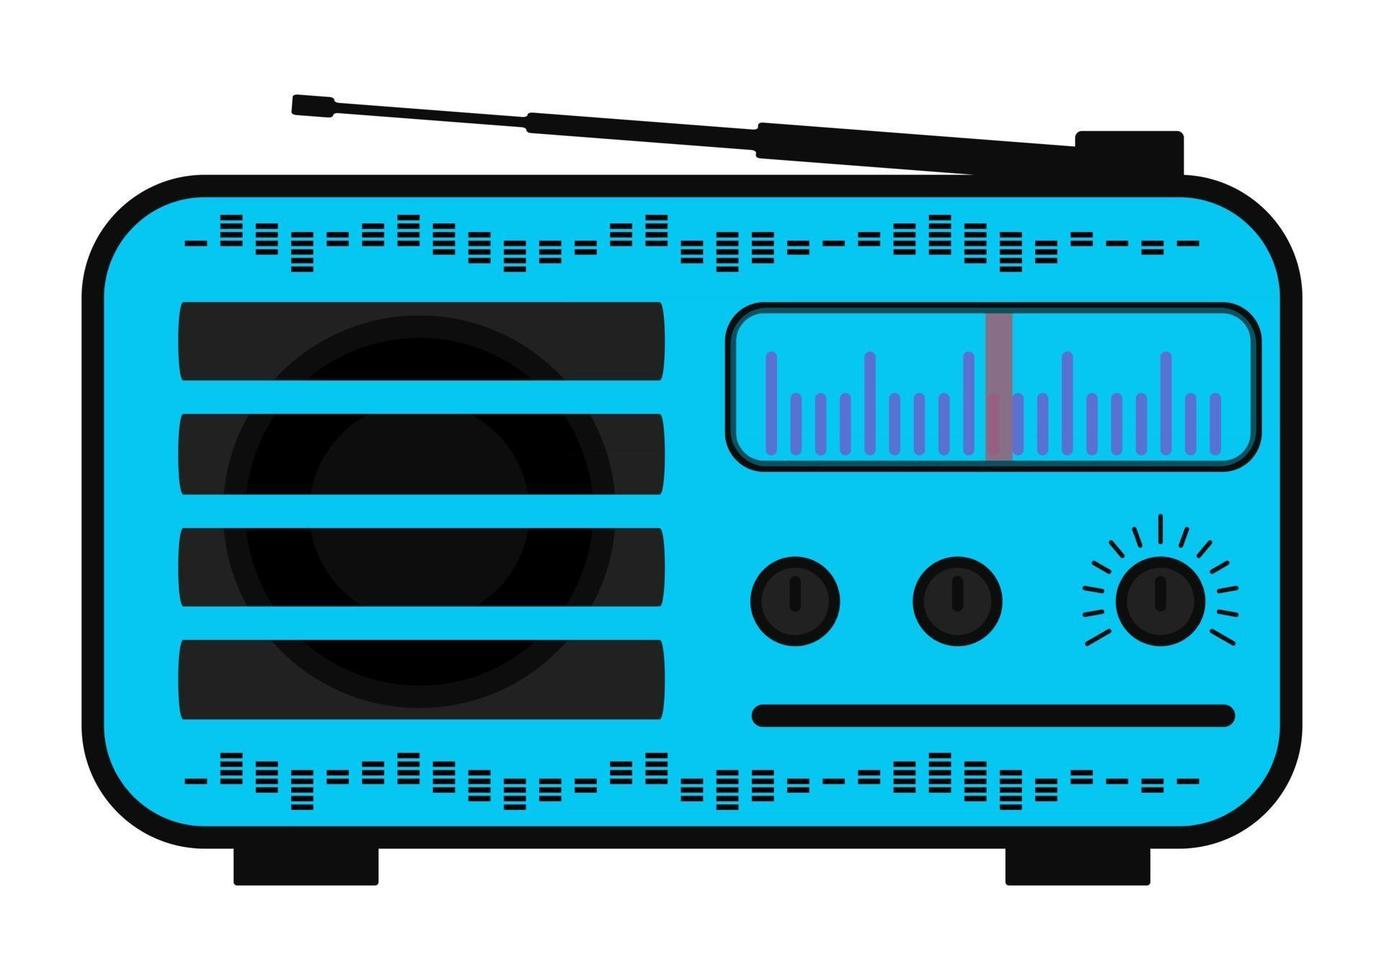 kleur radiostation. radio in paarse kleur met antenne, schaal. ontvangststation. vector